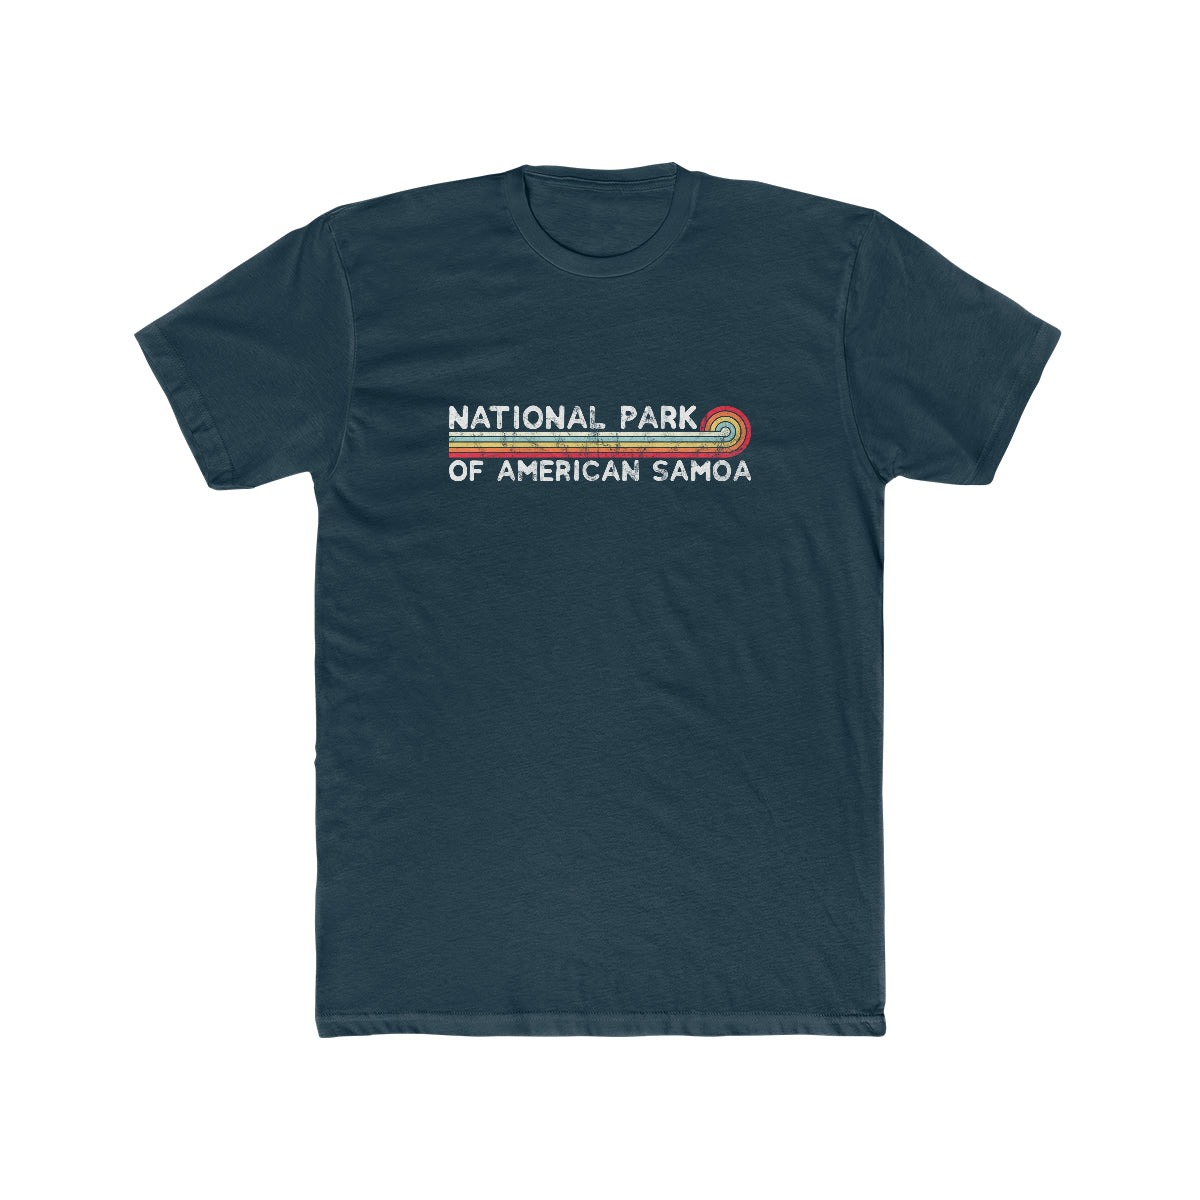 National Park of American Samoa T-Shirt - Vintage Stretched Sunrise